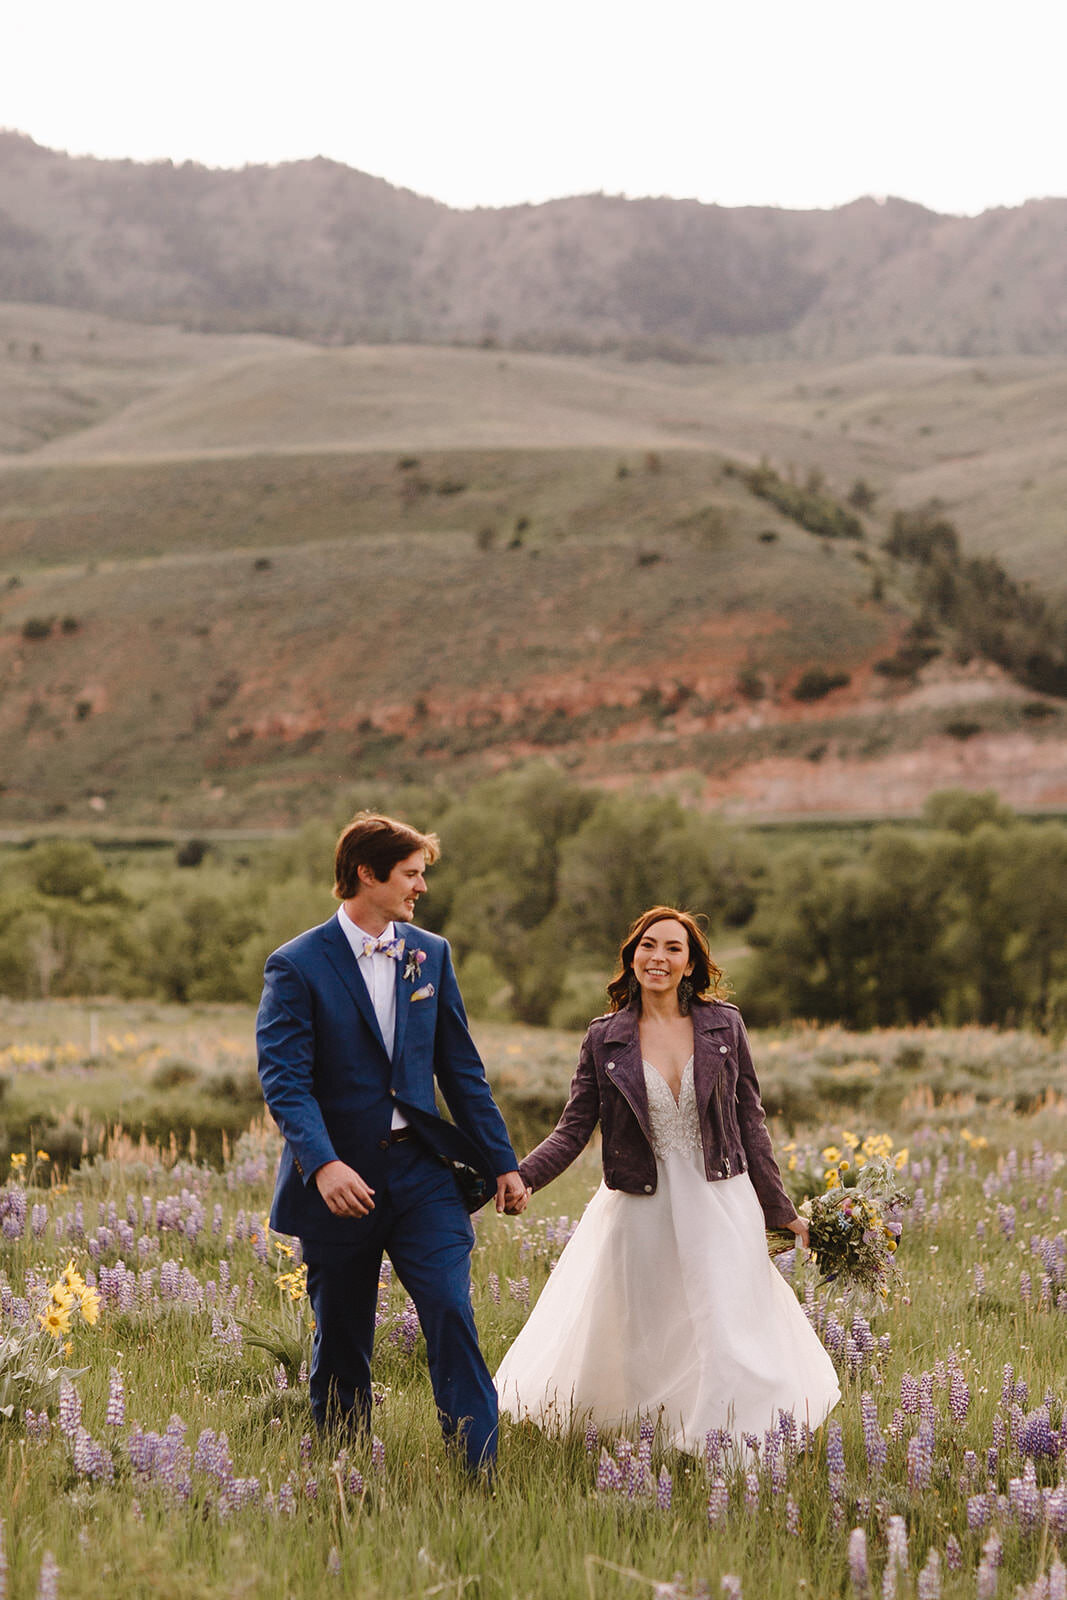 Liz Osban Photography Wyoming Wedding Photographer Cody Thermopolis Meeteetse Sheridan Big Horn Cheyenne Laramie Venue Ceremony Reception Florist Elopement Elope Best 9